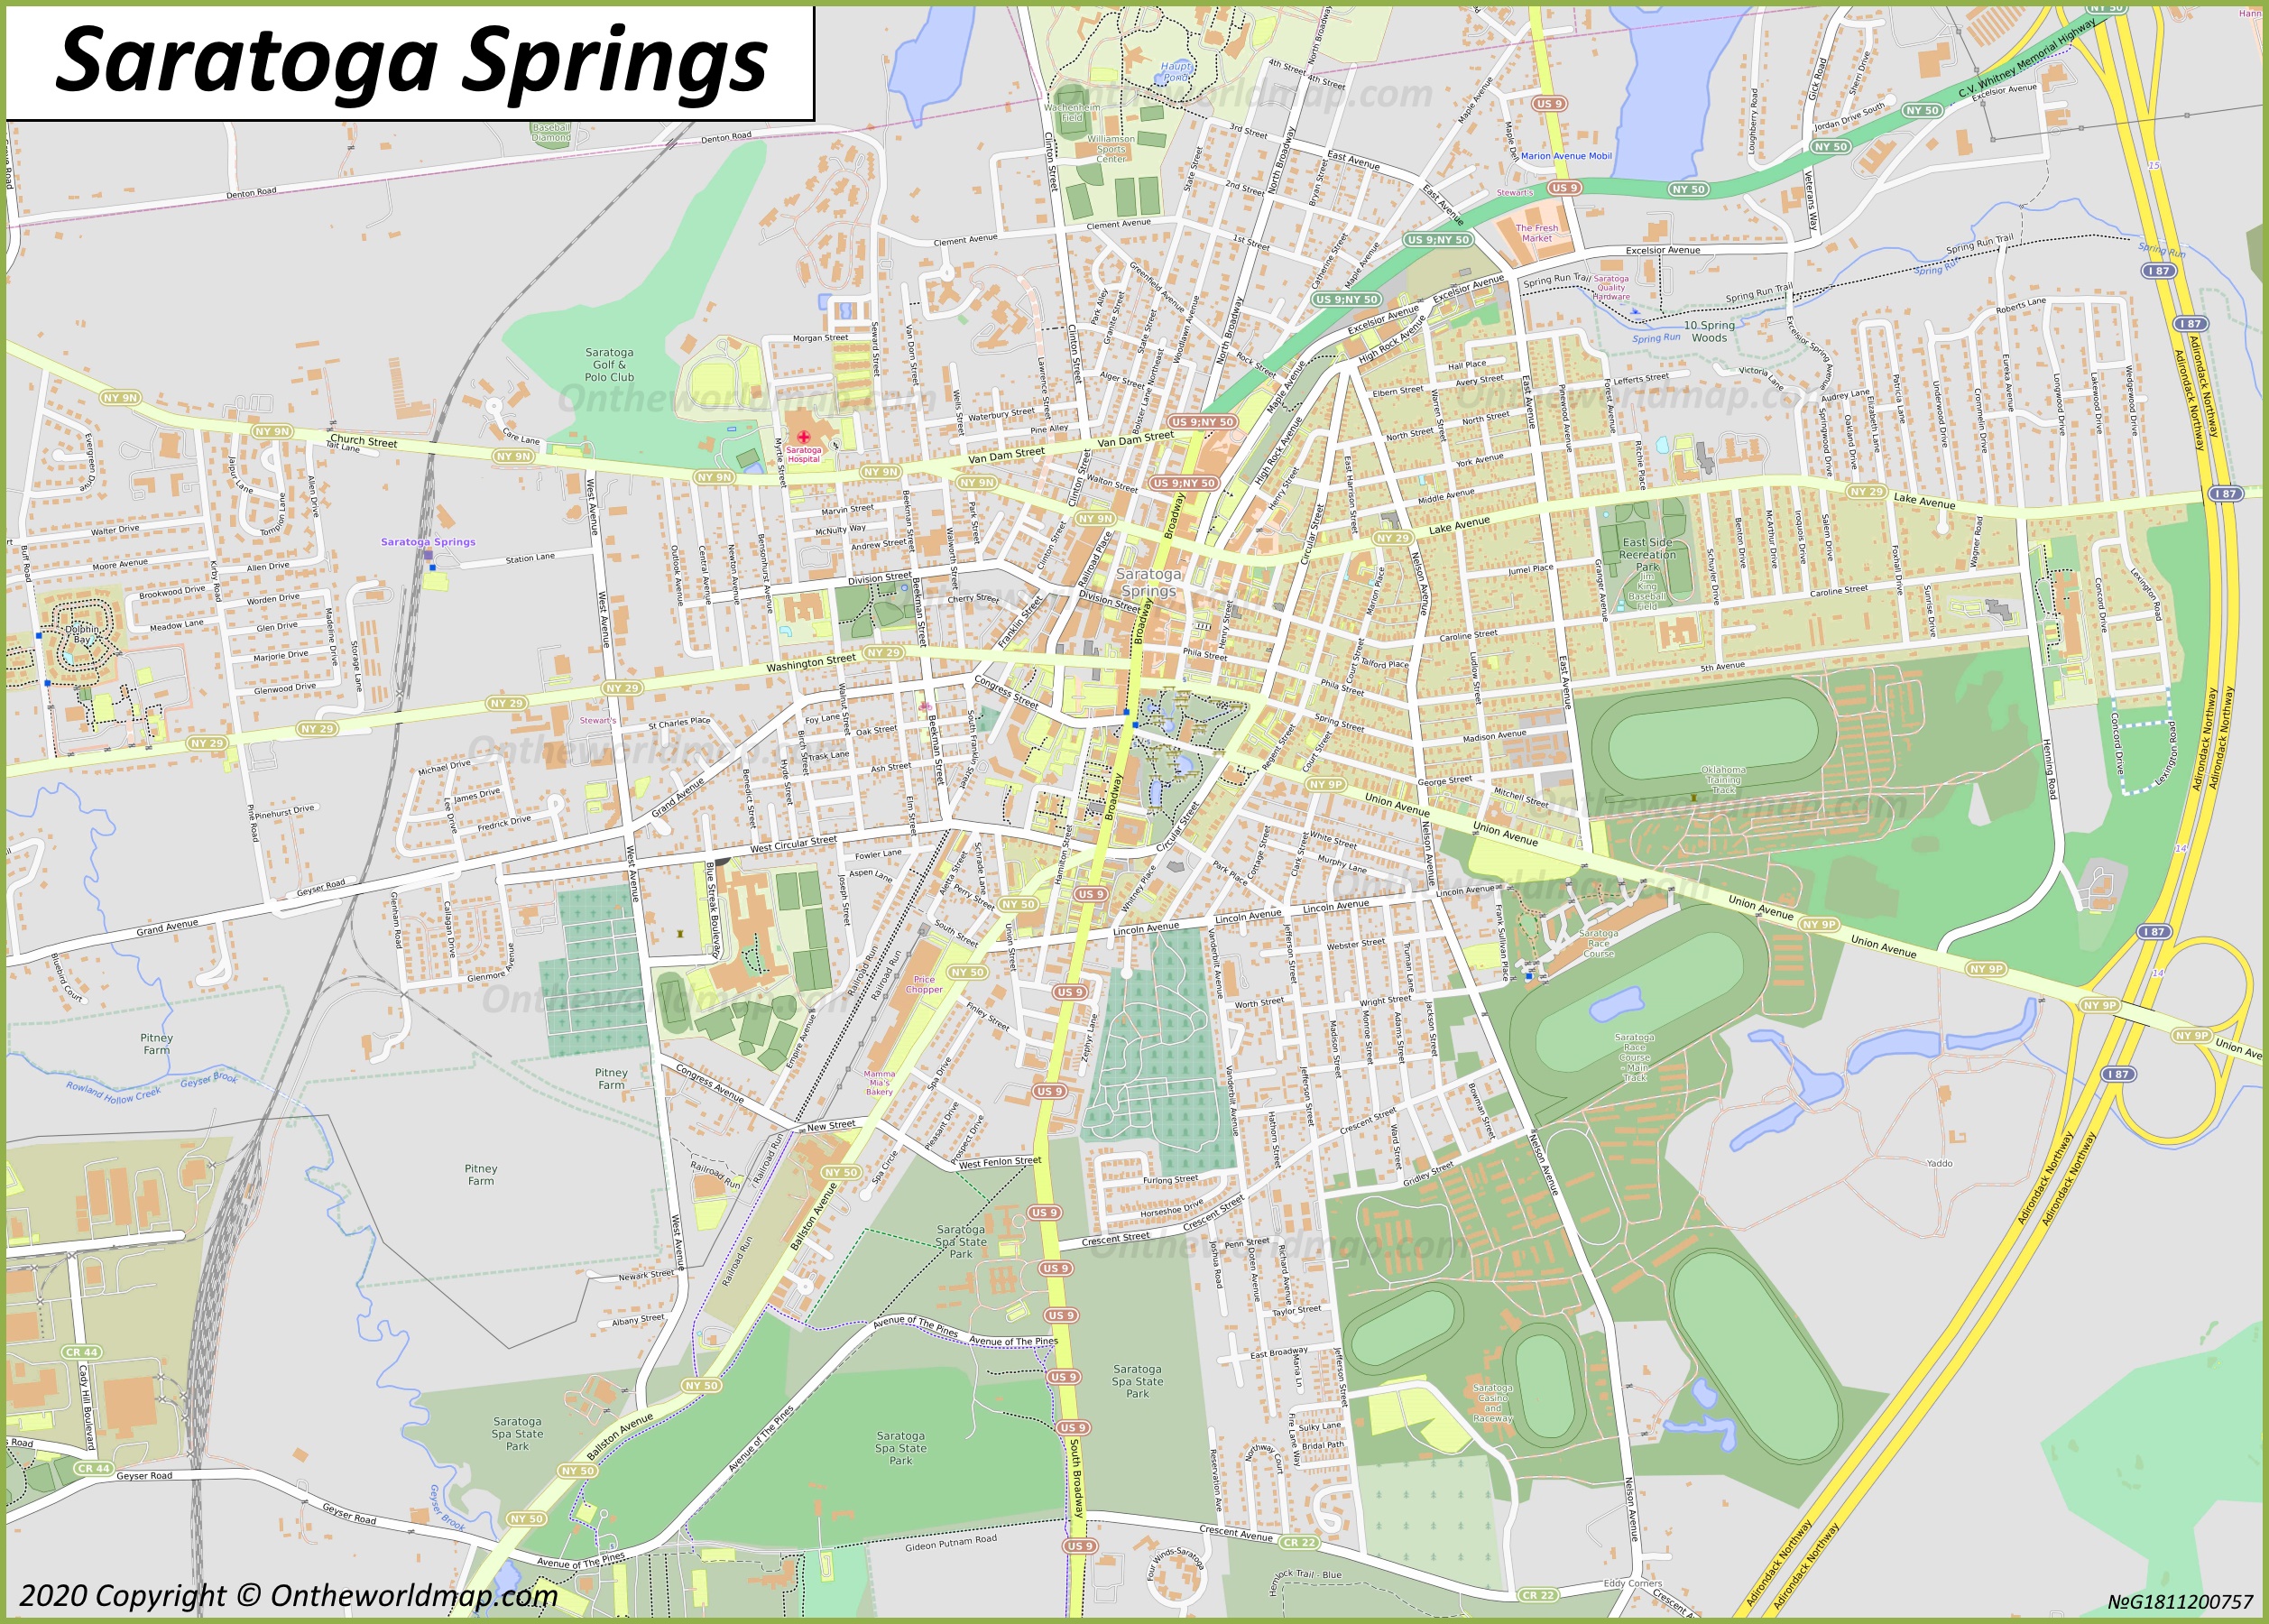 saratoga-springs-map-new-york-u-s-discover-saratoga-springs-with